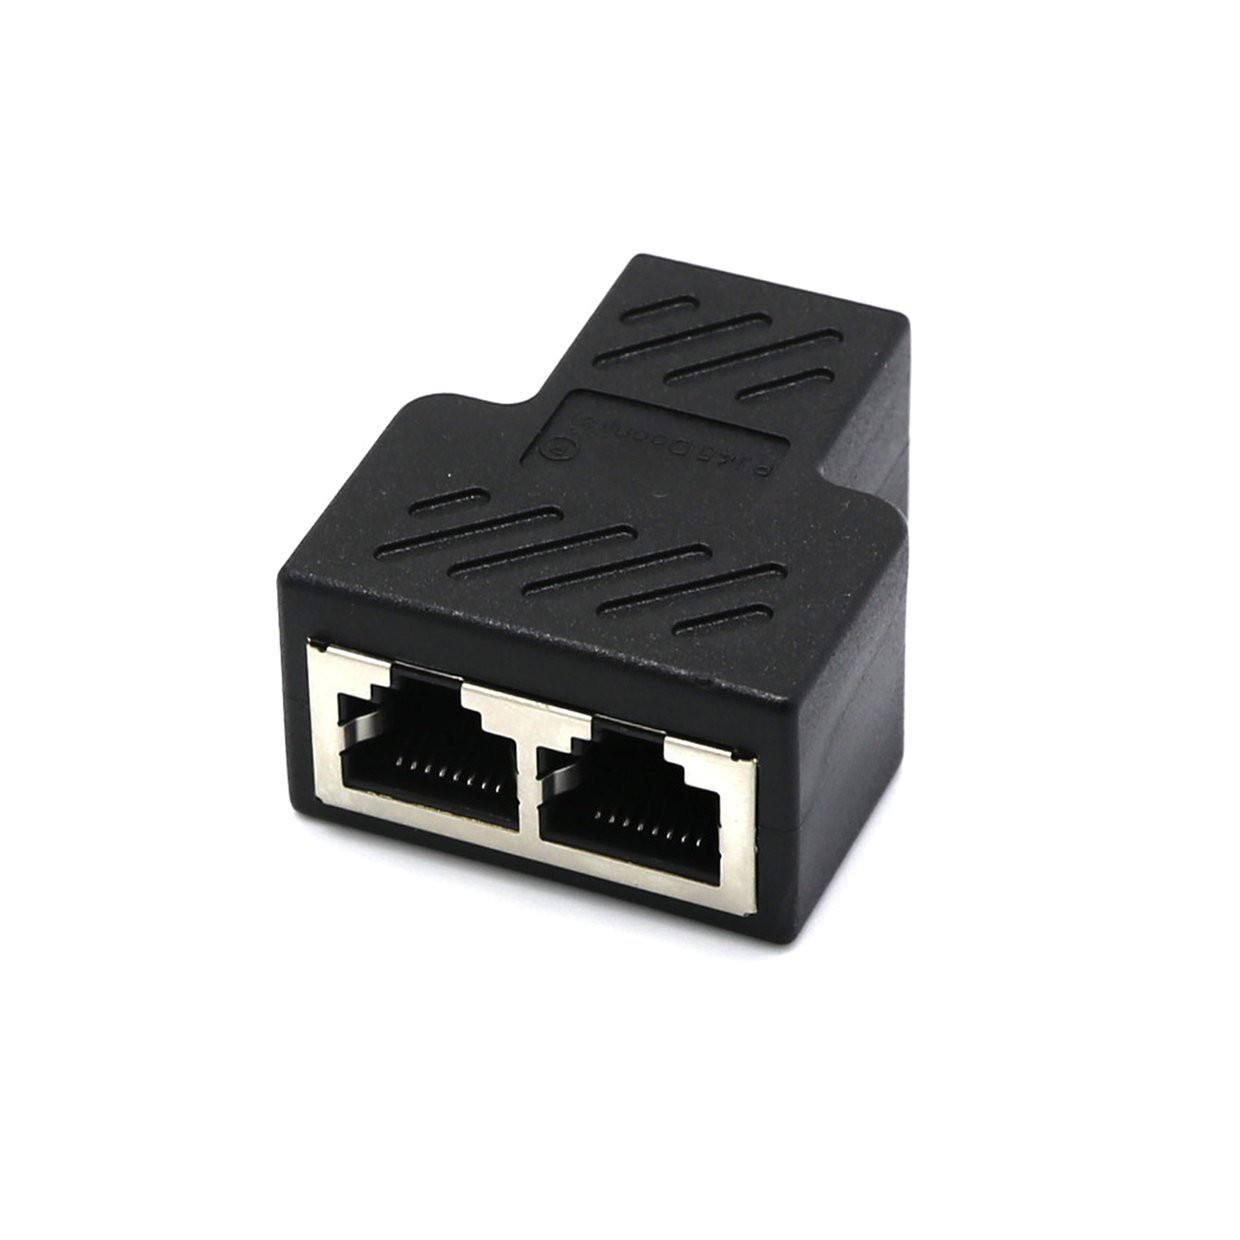 New Splitter Ethernet Rj45 Cable Adapter 1 Male To 2 / 3 Female Port Female Network